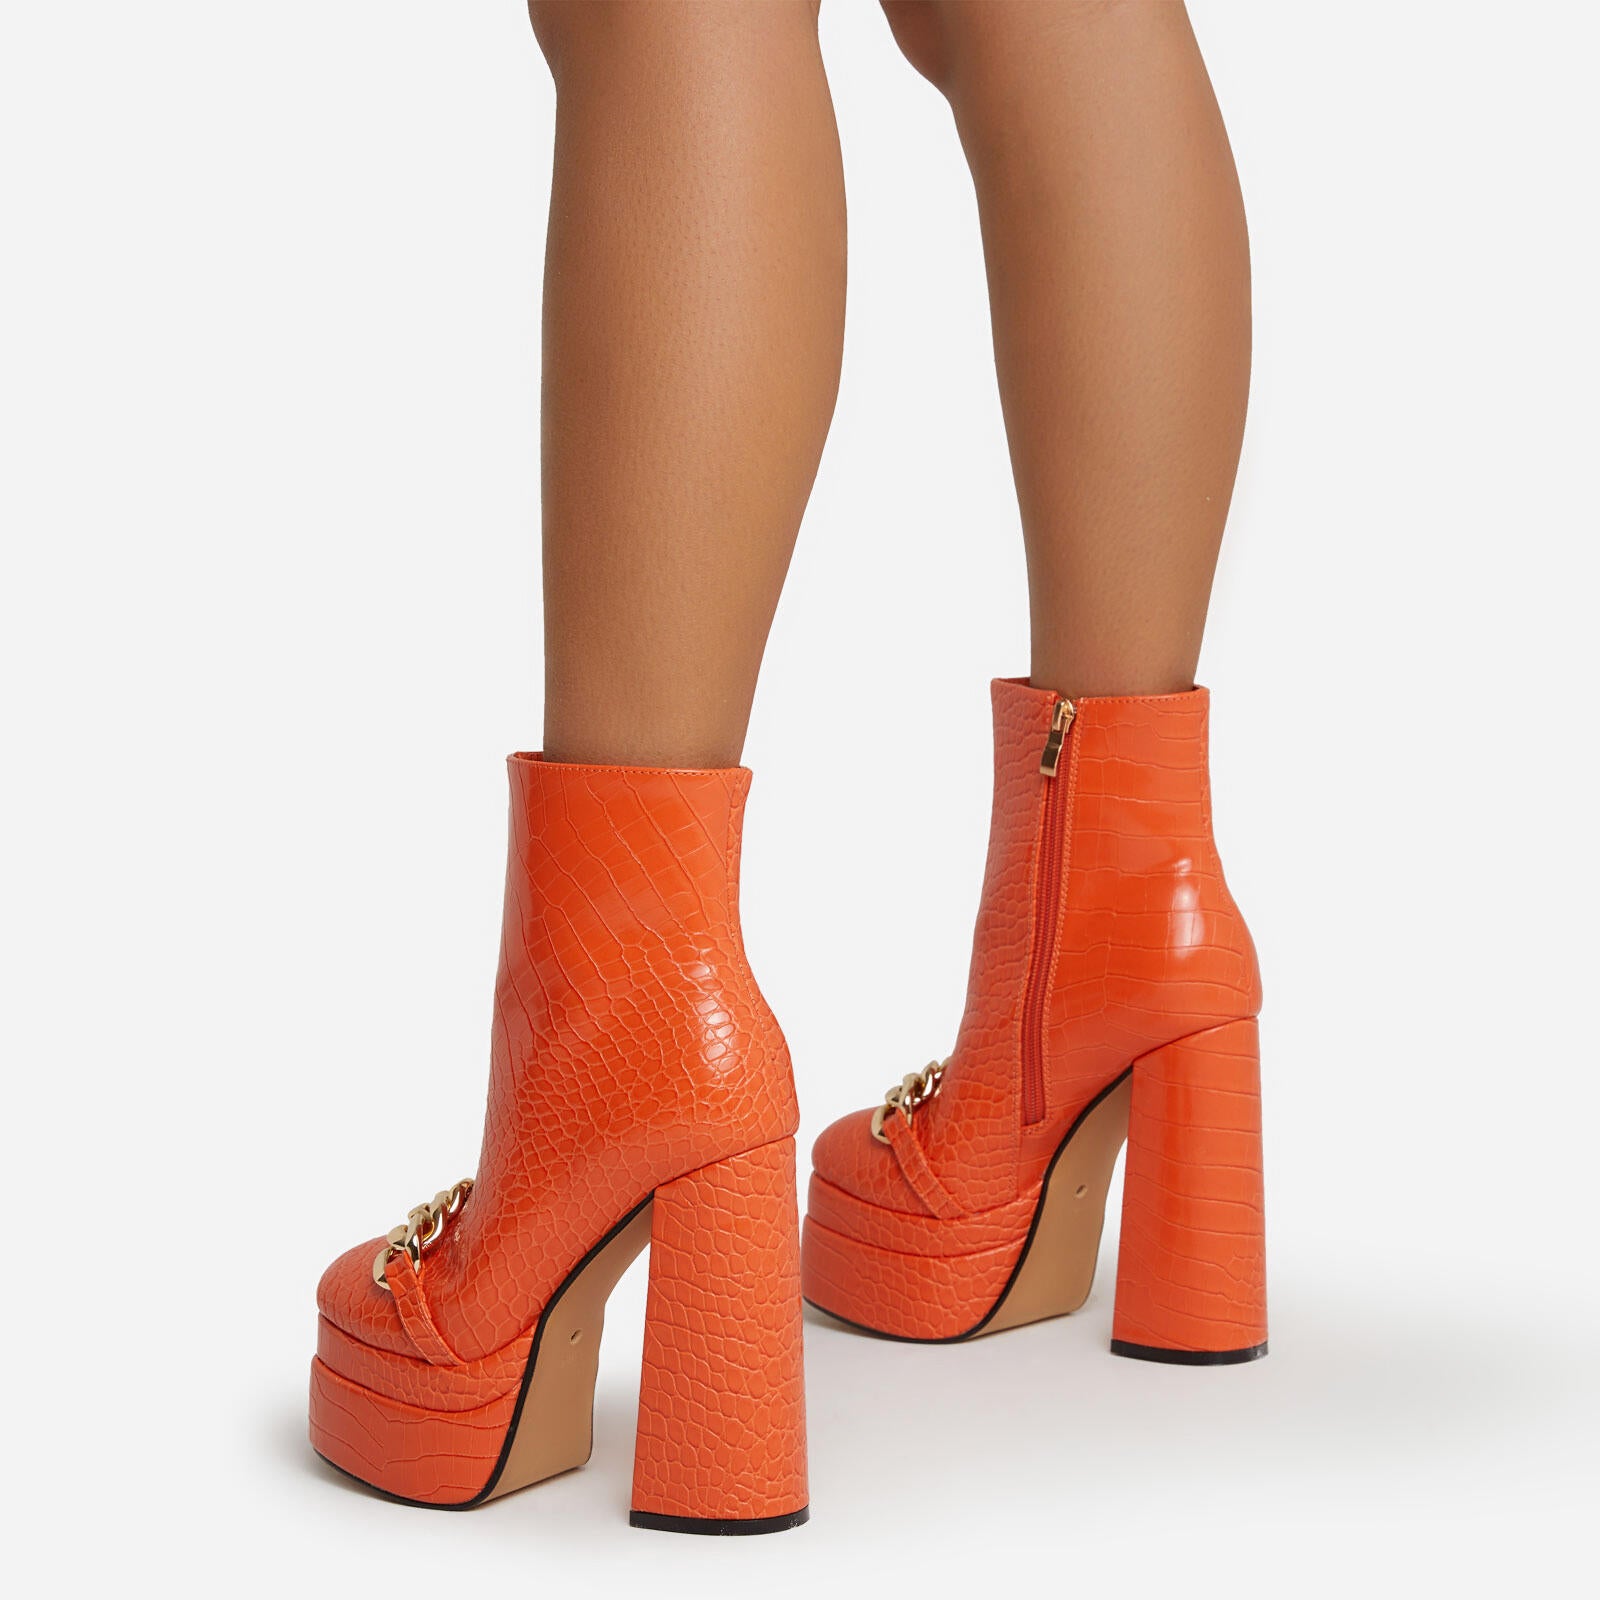 Bigsizeheels Platform super high heel sexy short boots - Orange freeshipping - bigsizeheel®-size5-size15 -All Plus Sizes Available!